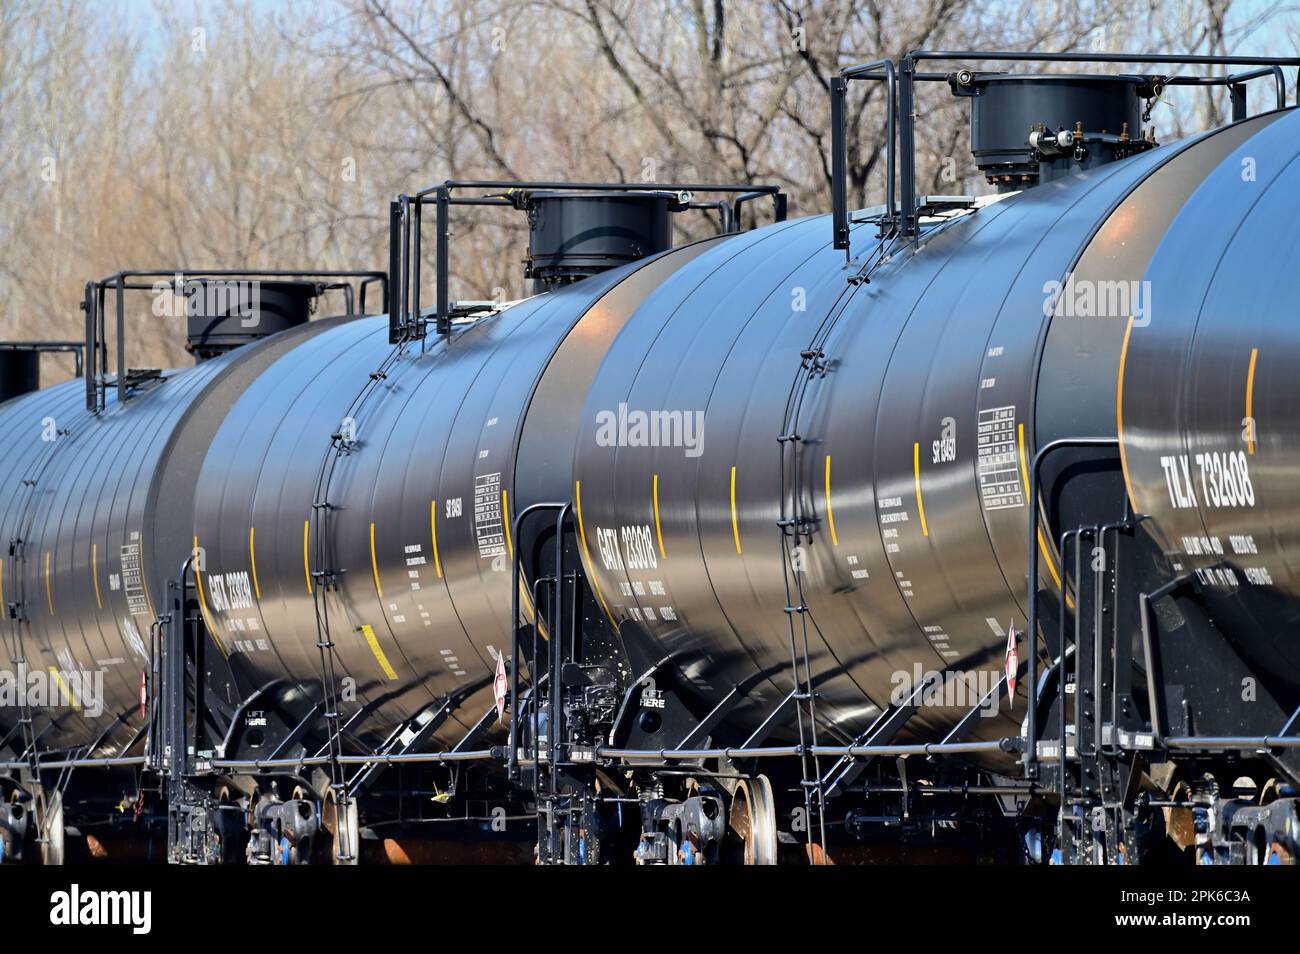 Elgin, Illinois, USA. A string of tank cars in a freight train passing through northeastern Illinois. Stock Photo